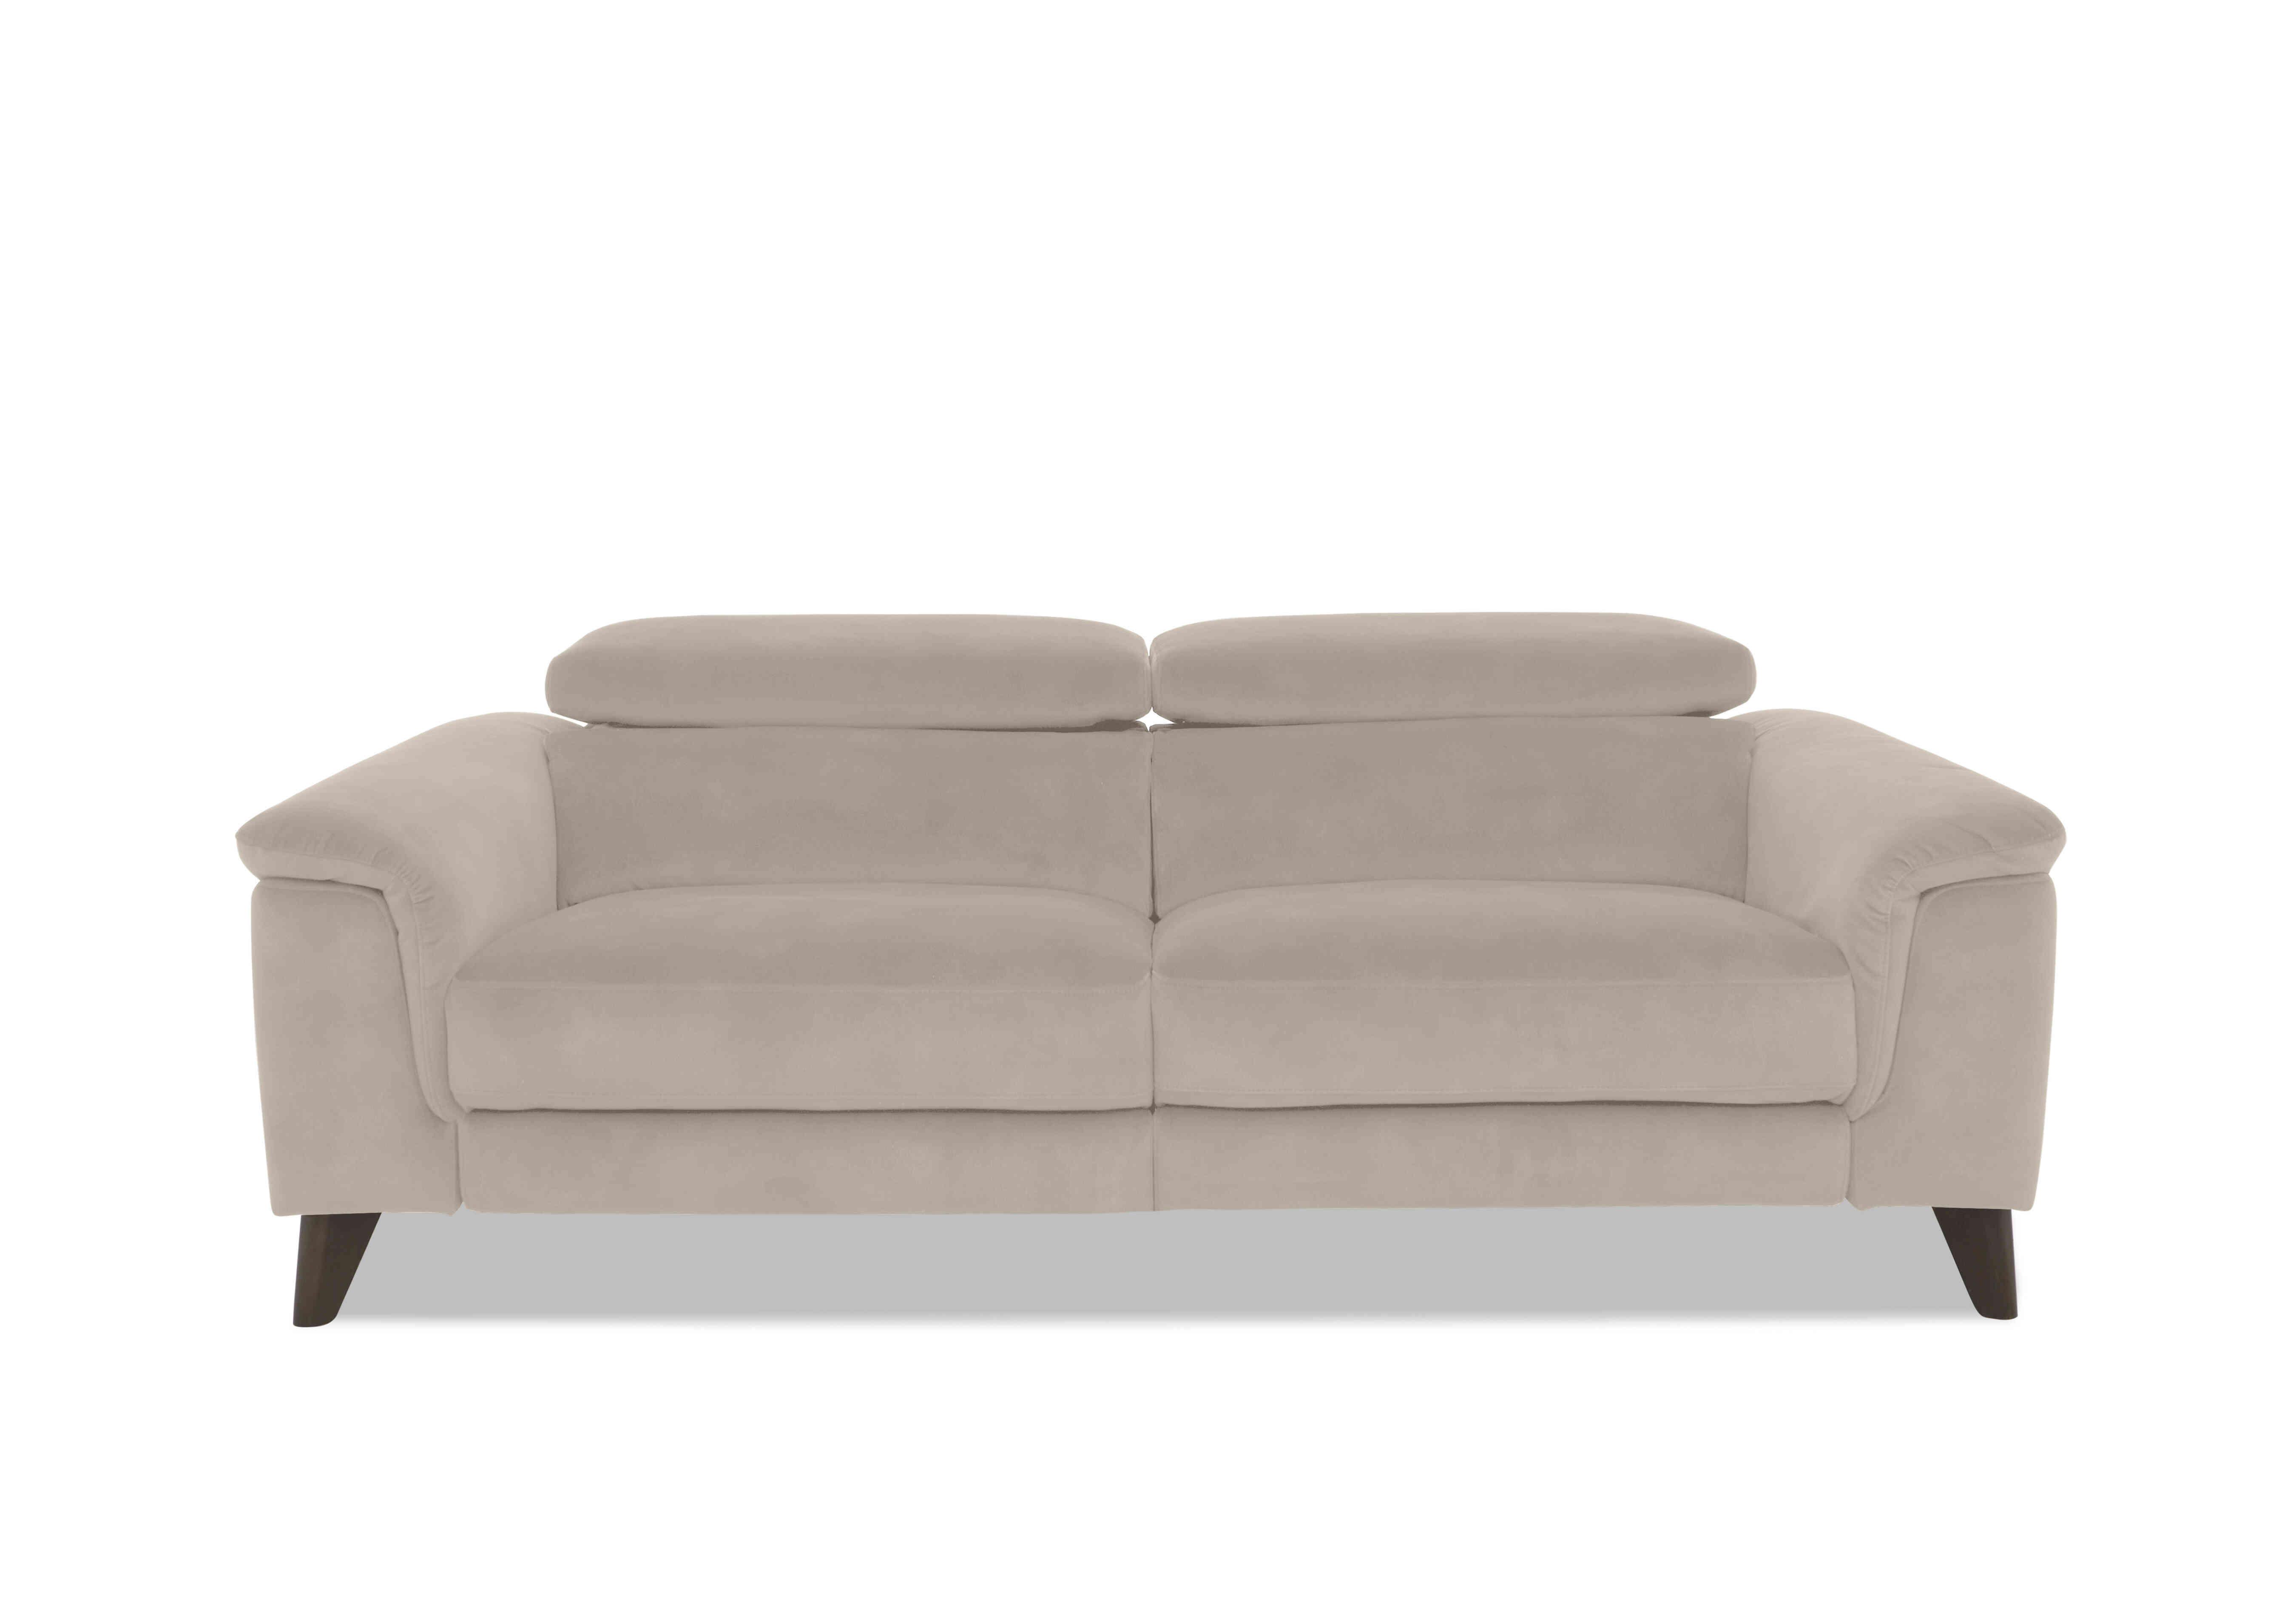 Wade 3 Seater Fabric Sofa in Fab-Meg-R32 Light Khaki on Furniture Village